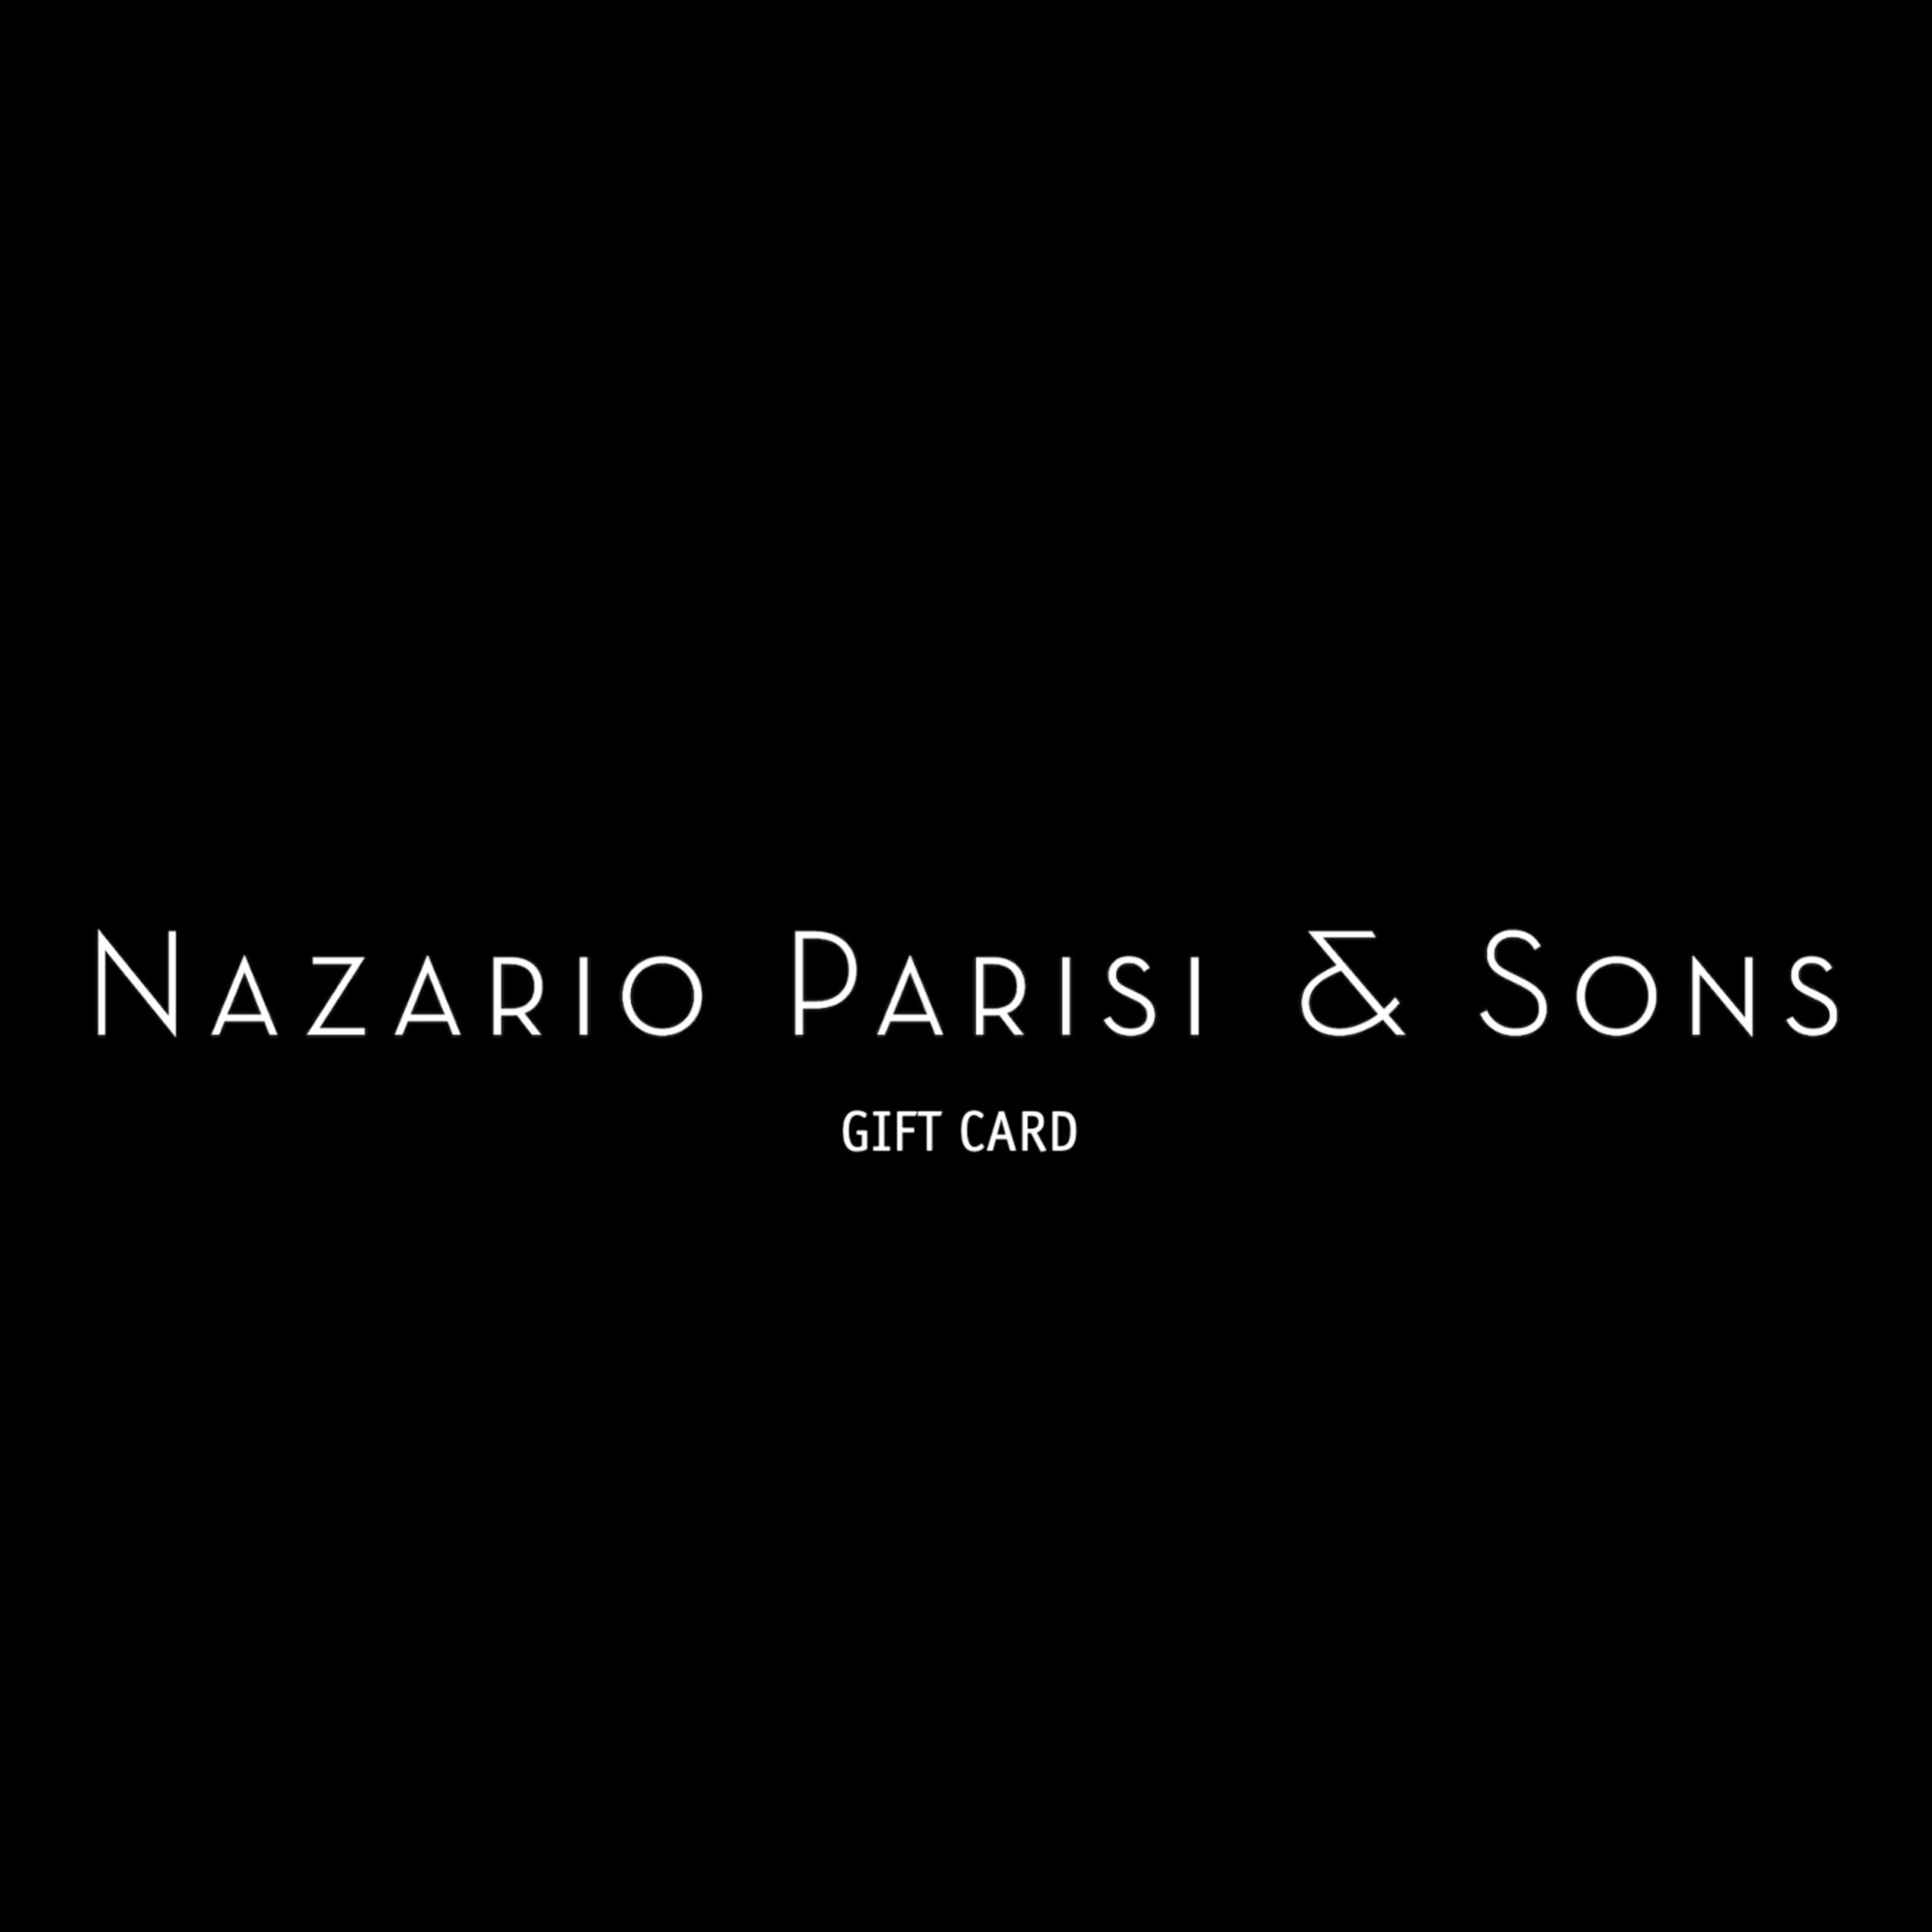 Nazario Parisi & Sons Gift Card